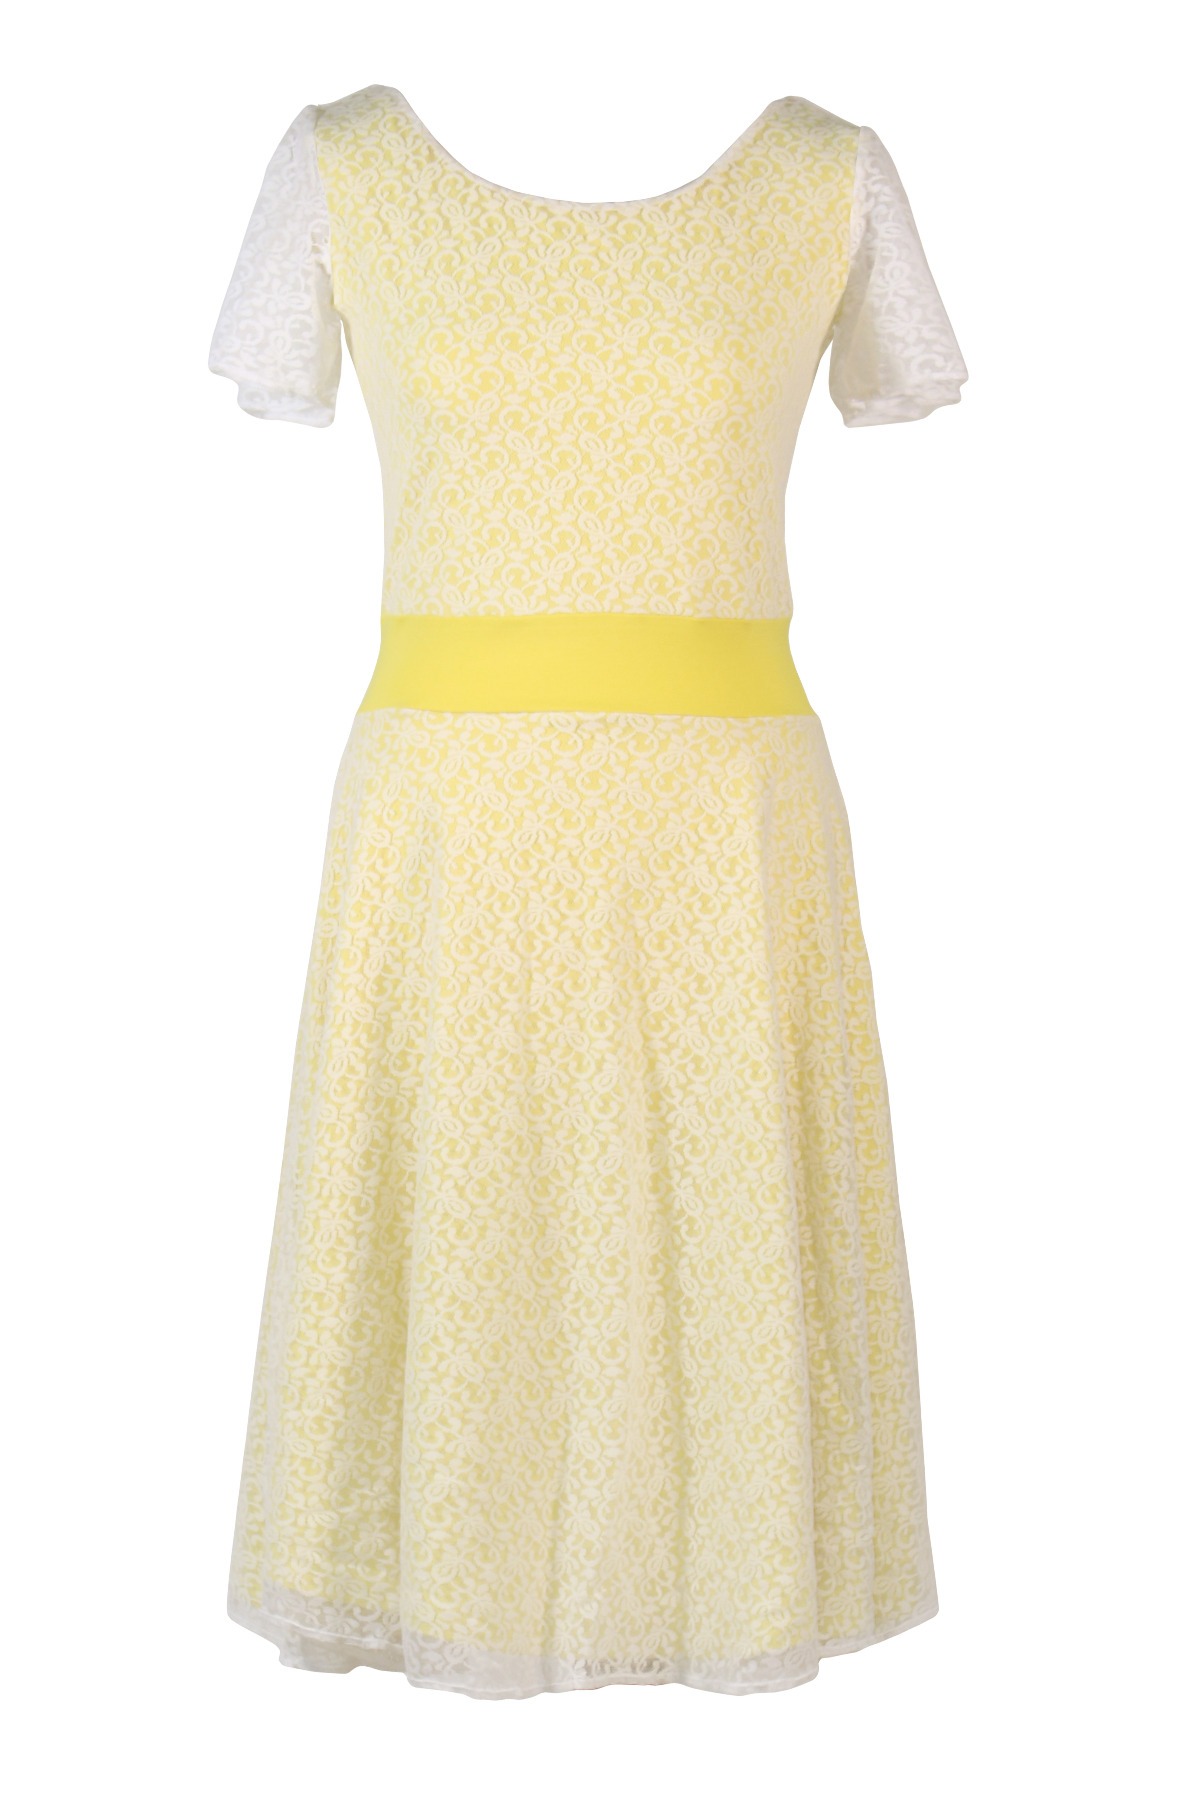 Organic dress Perle lemon yellow + white